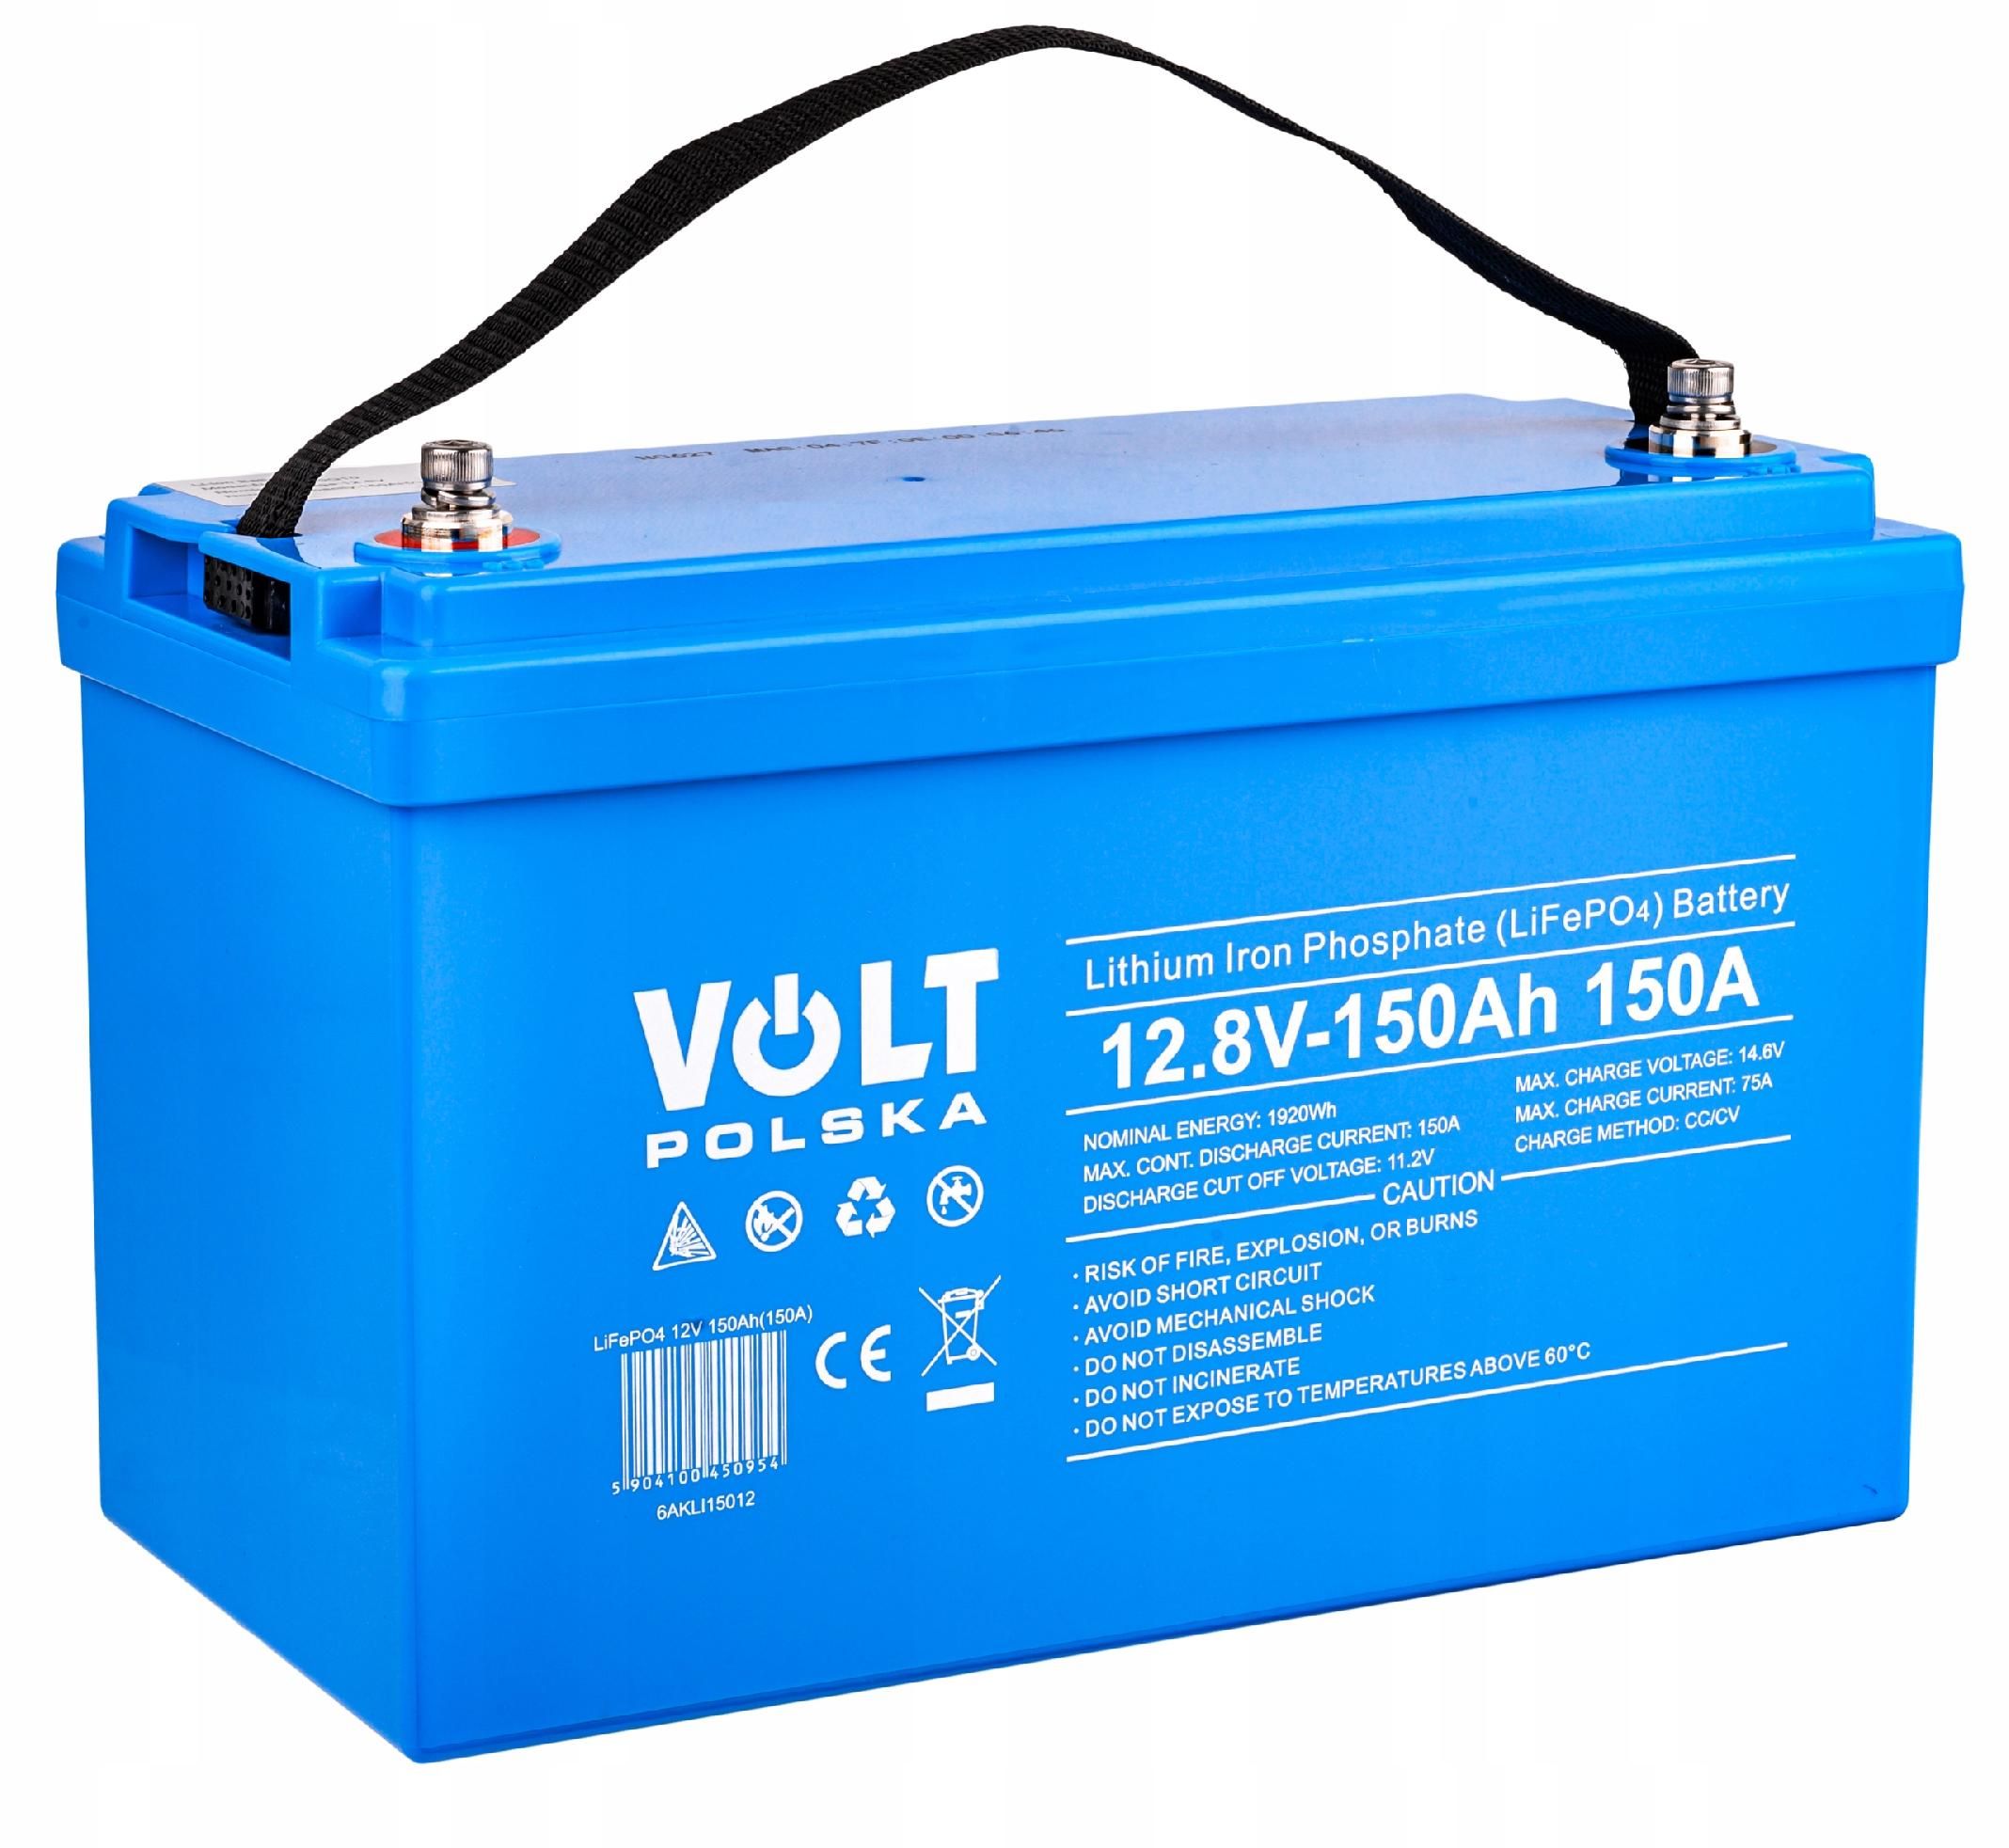 Akumulator lifepo4 bluetooth bms 150ah 12v 150a [AKU55]